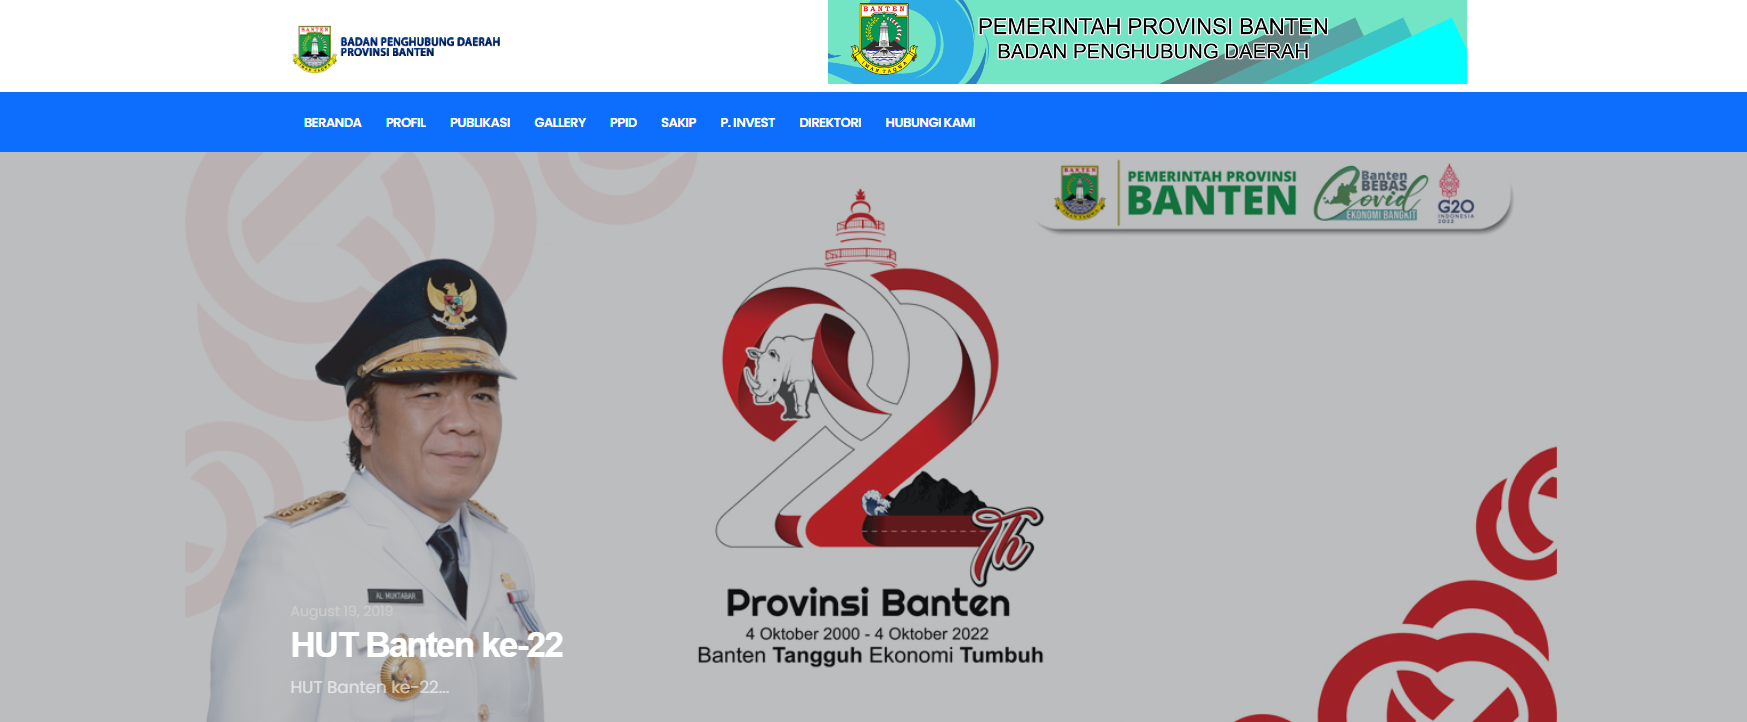 Badan Penghubung Daerah Provinsi Banten